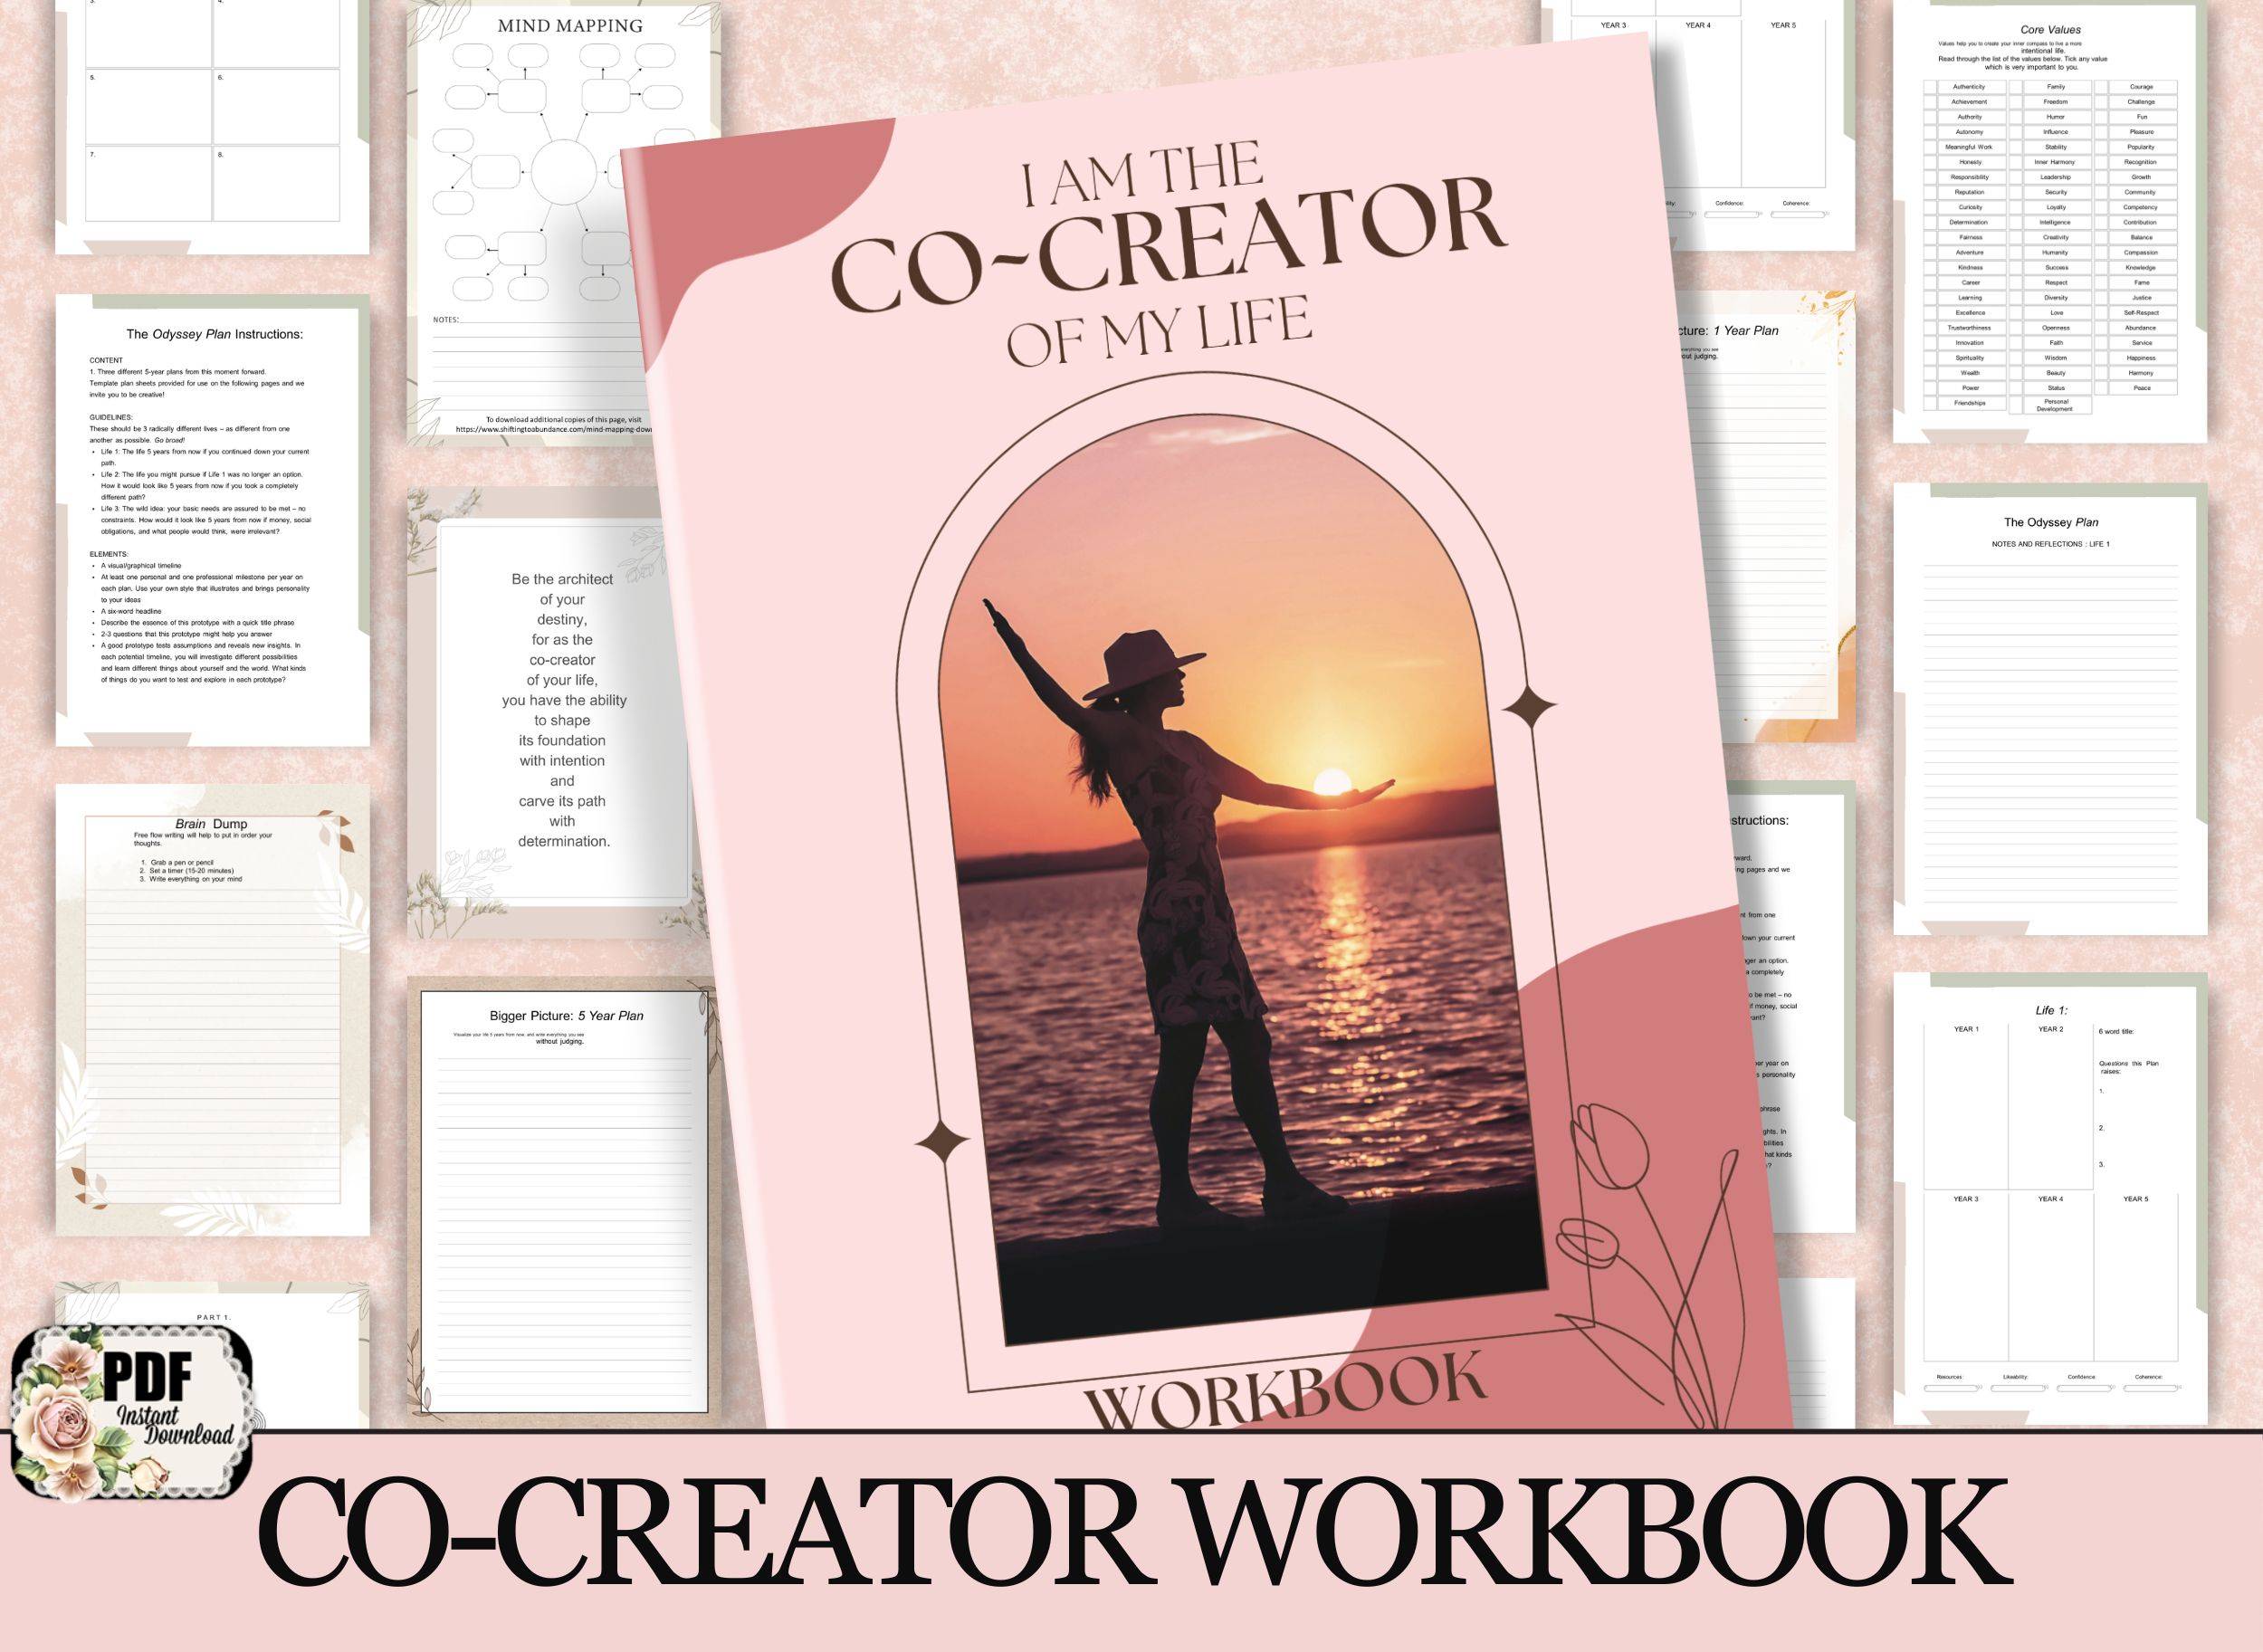 I am the co-creator of my life workbook